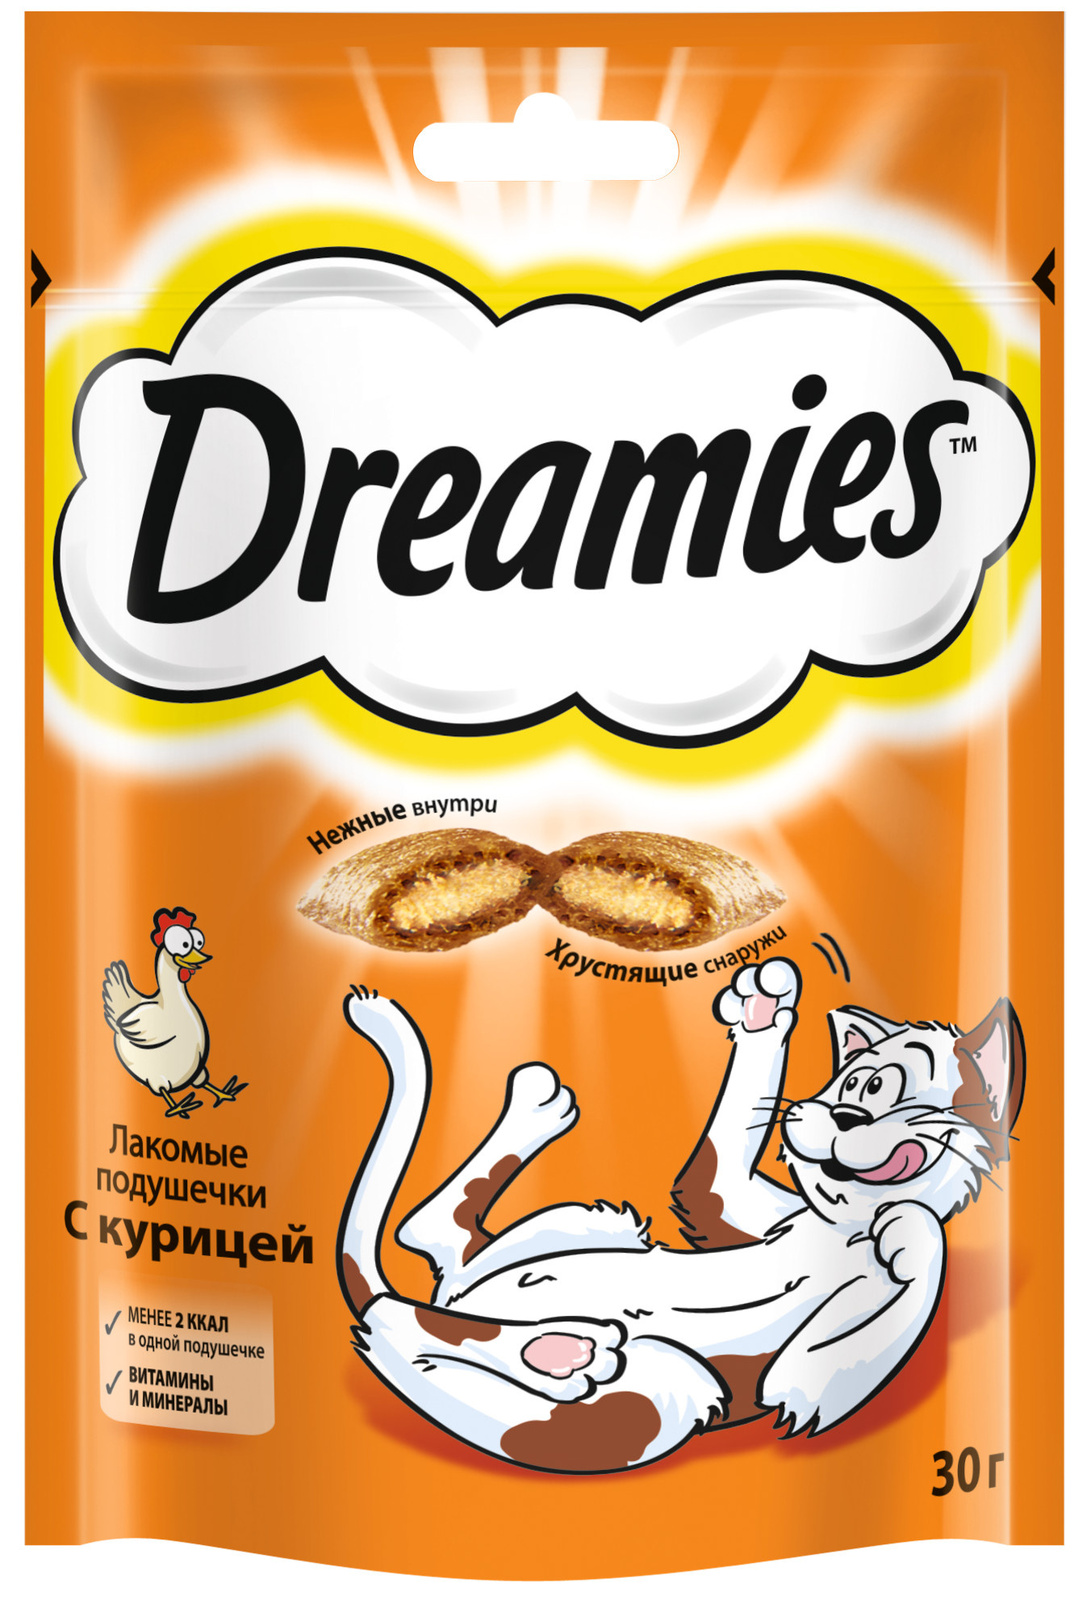 Dreamies Dreamies лакомство для кошек Dreamies подушечки с курицей (140 г) лакомство для кошек dreamies с индейкой 140 г 5 шт